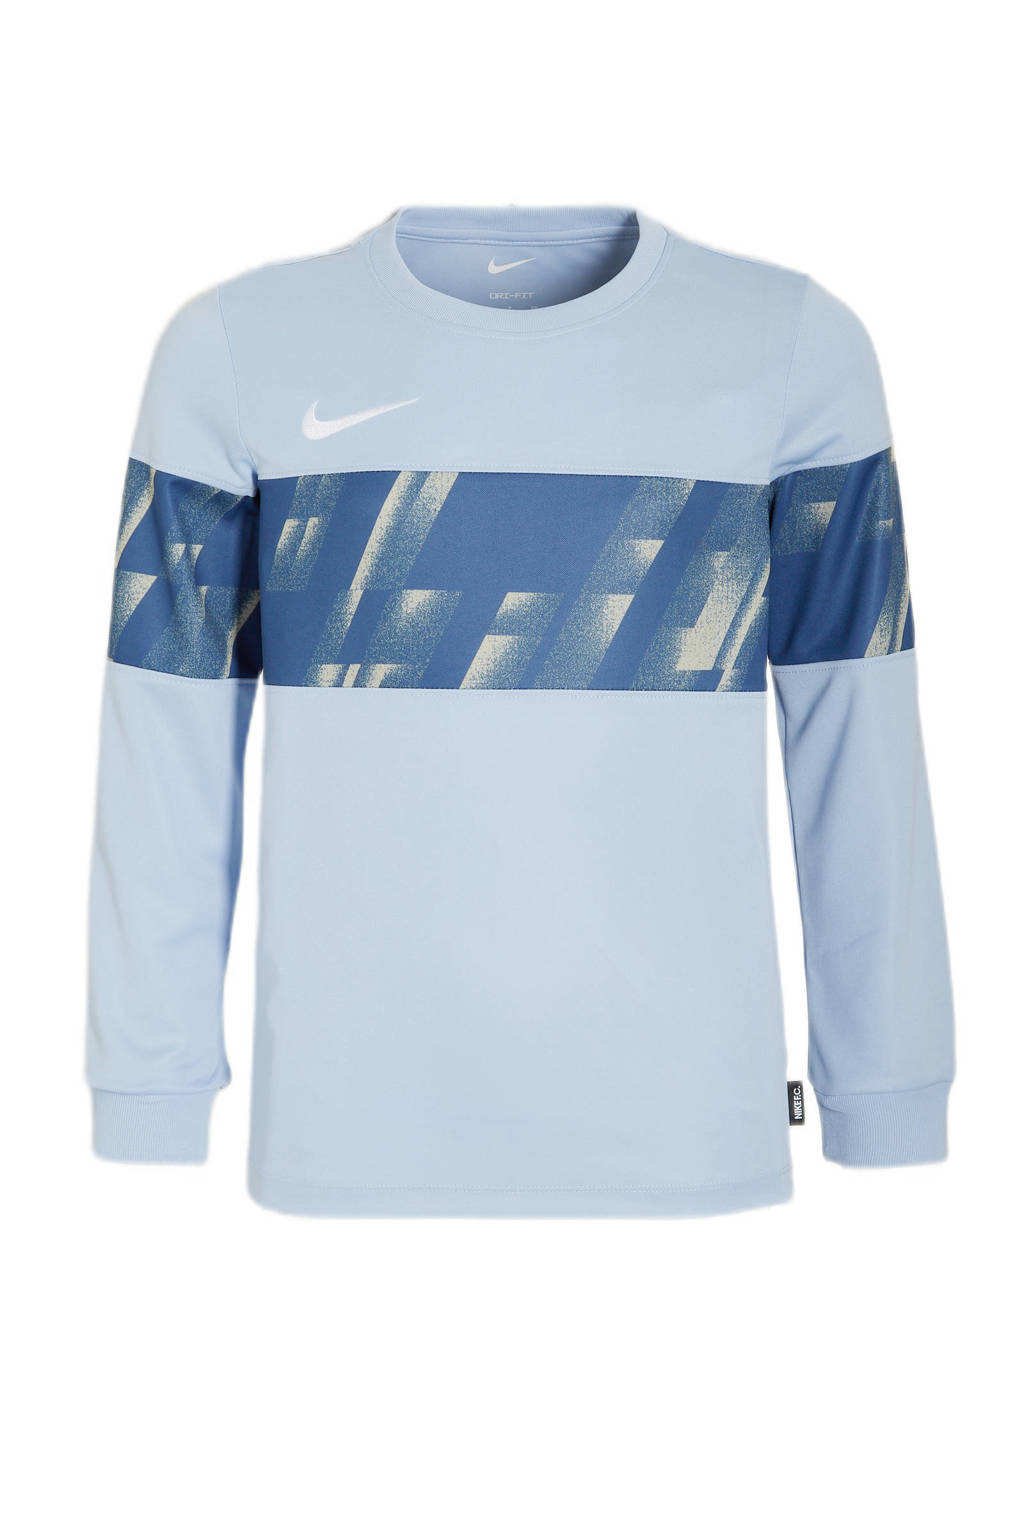 Nike   voetbalshirt lichtblauw